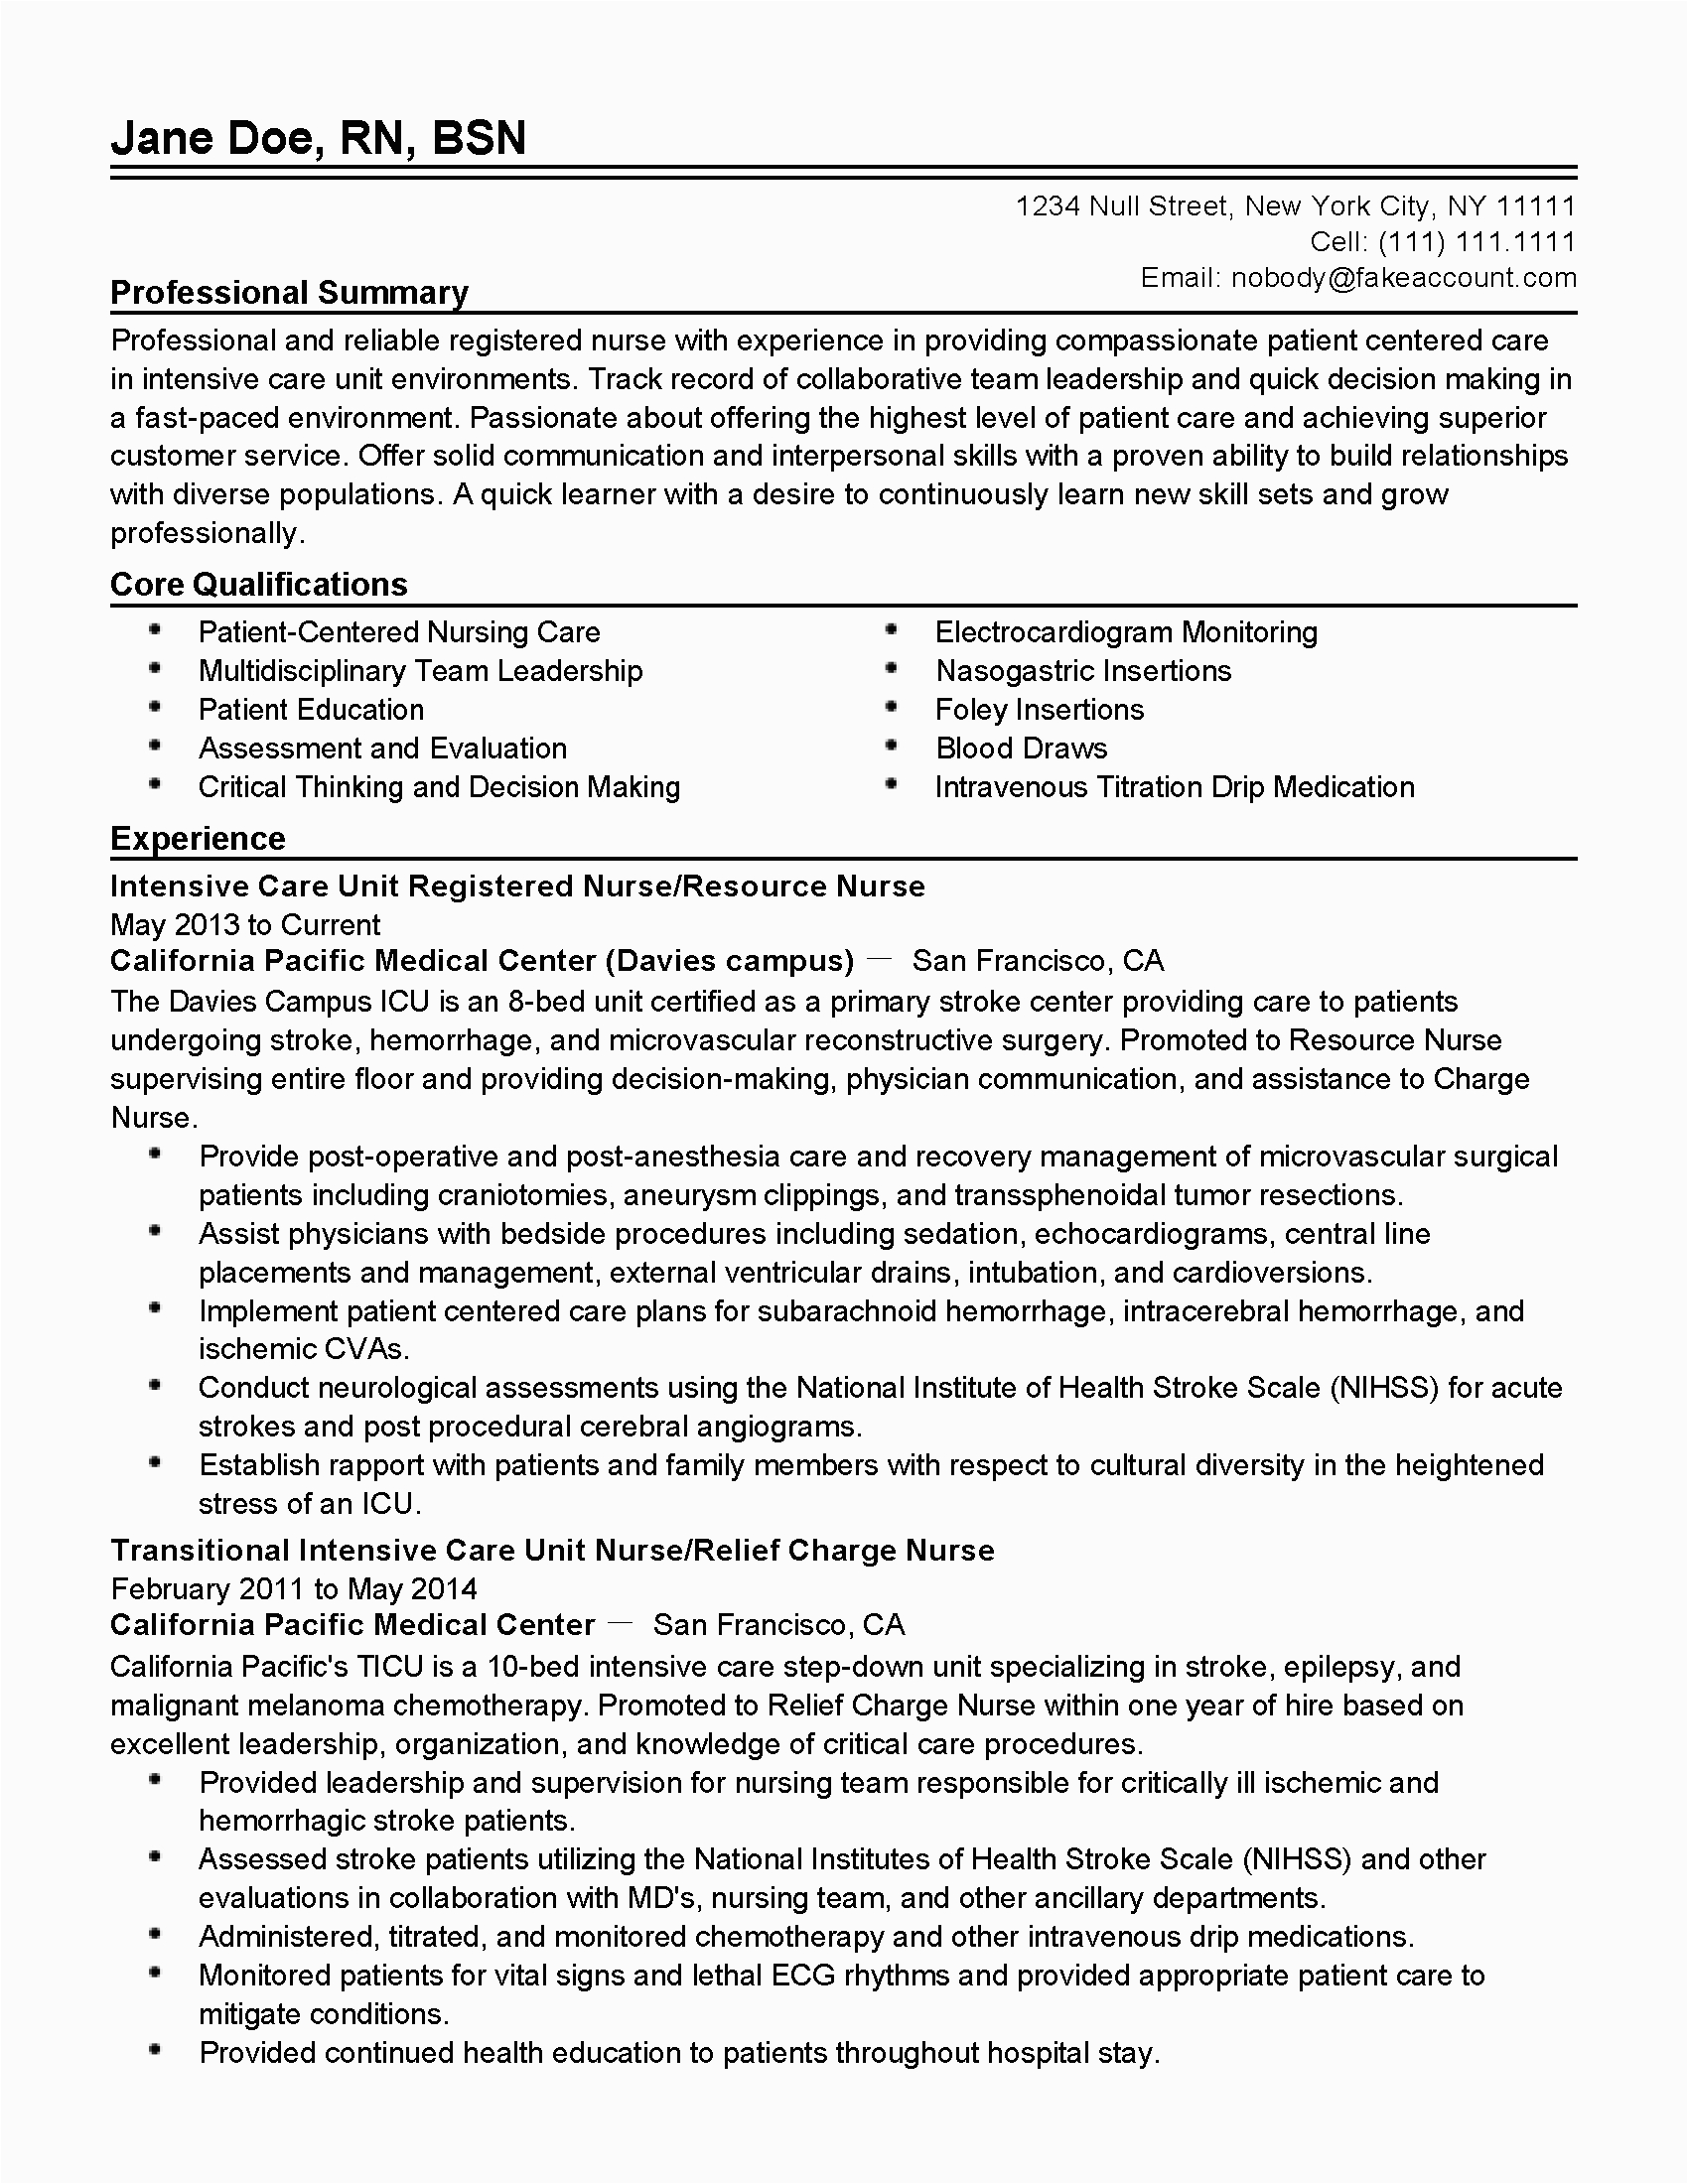 Sample Professional Summary for Nursing Resume Image Result for Registered Nurse Resume Summary Examples